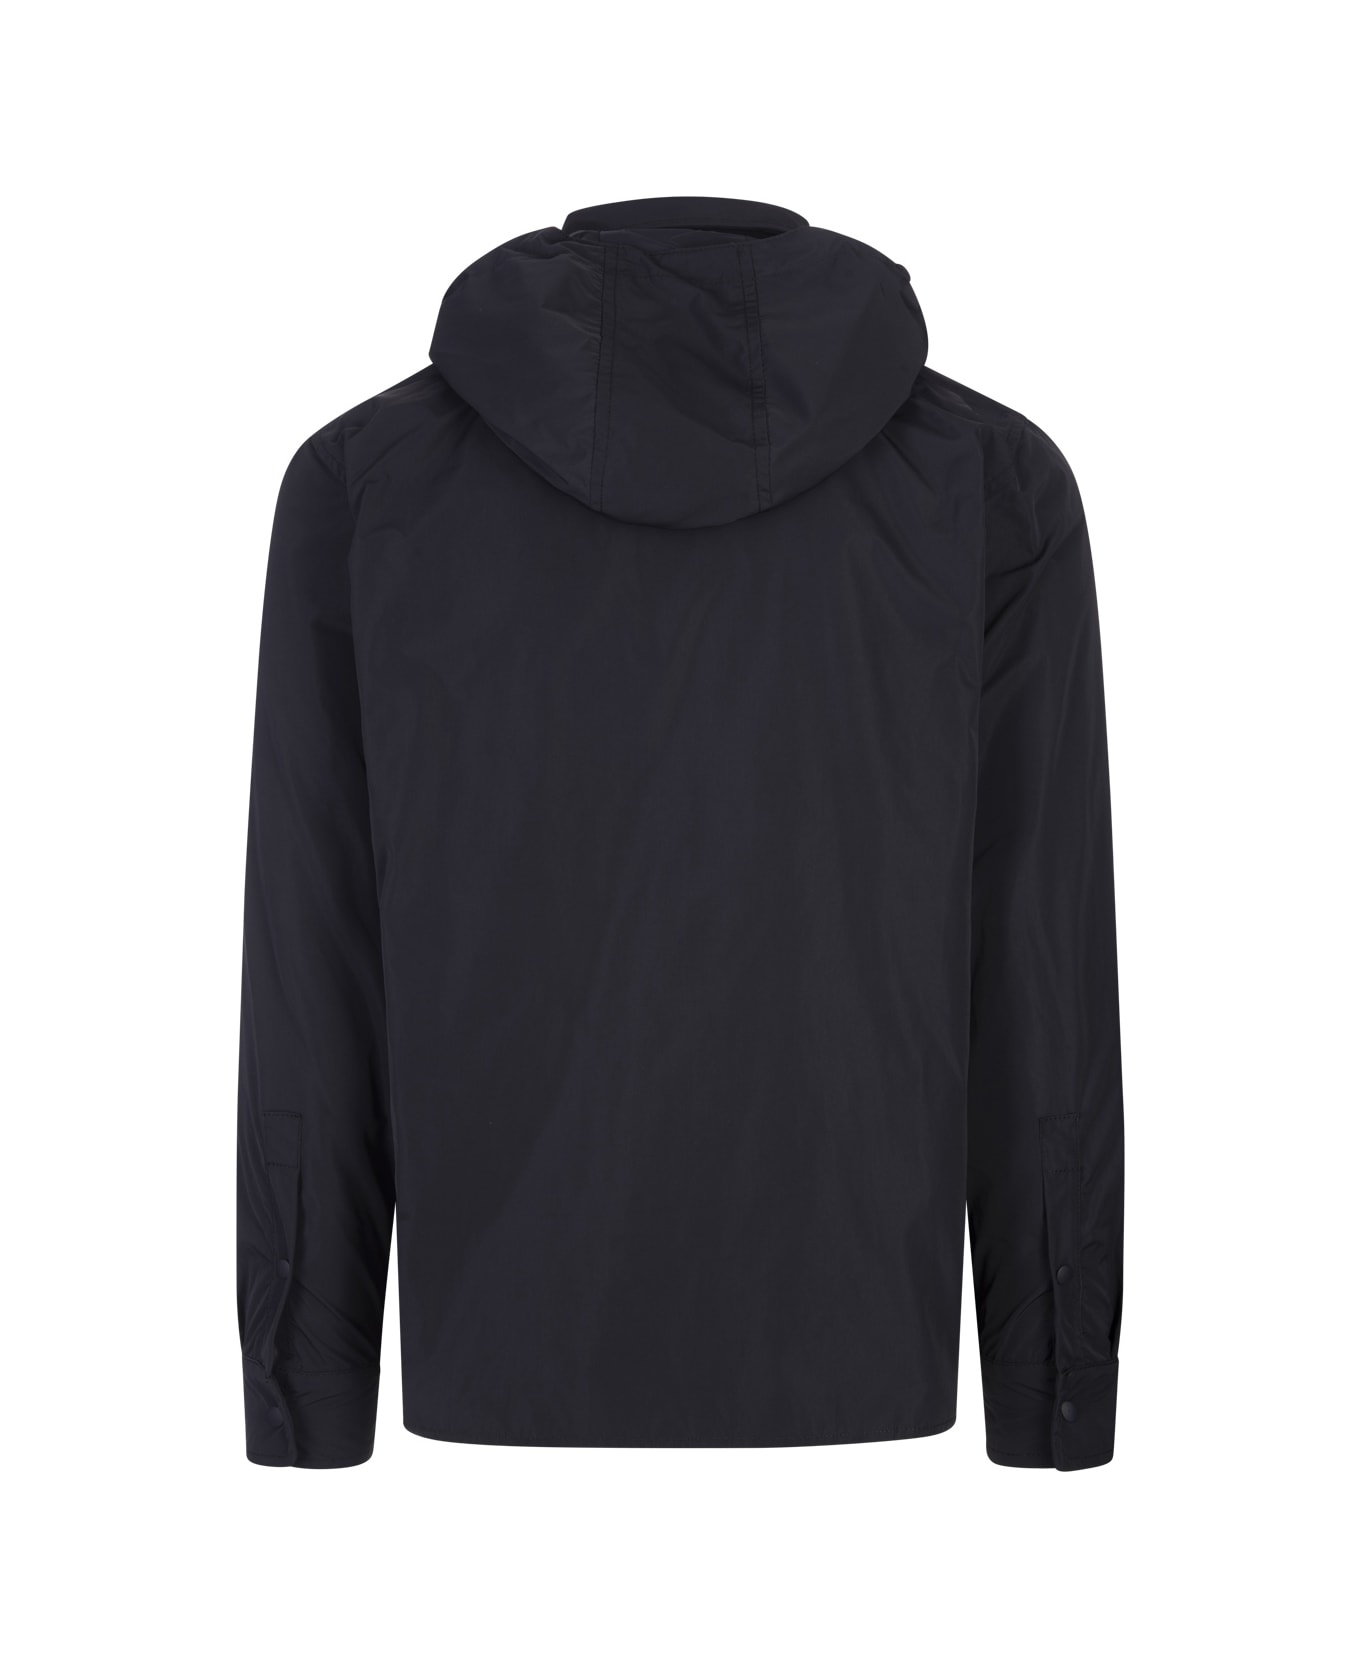 Aspesi Black Hooded Shirt Jacket - Black